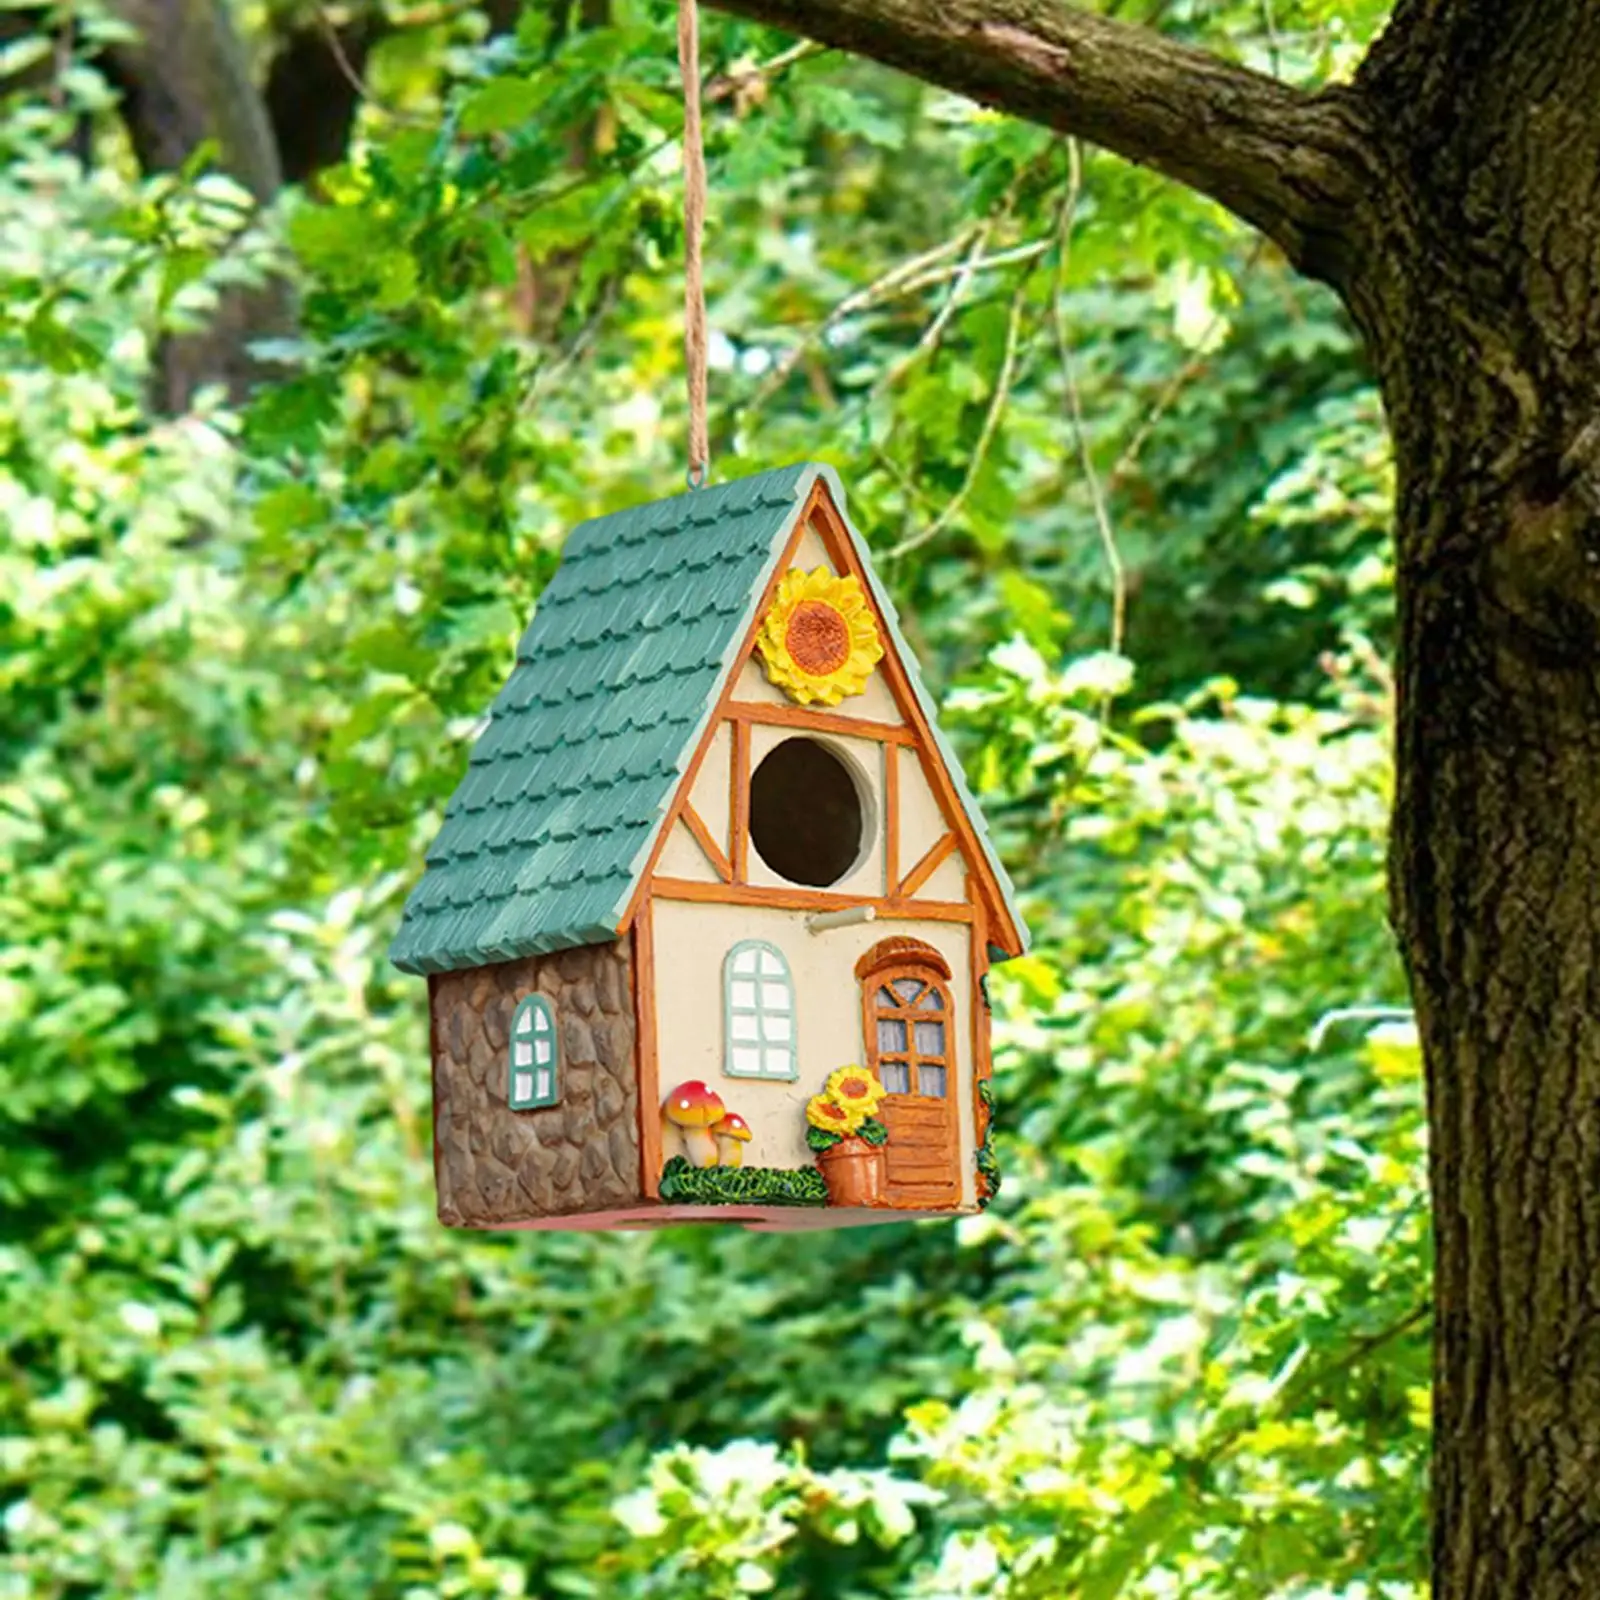 Bird House Weather Resistance Bird Nest Bird Cottages Nest Small Bird Rest Place for Backyard Gardening Gift Fence Garden Patio